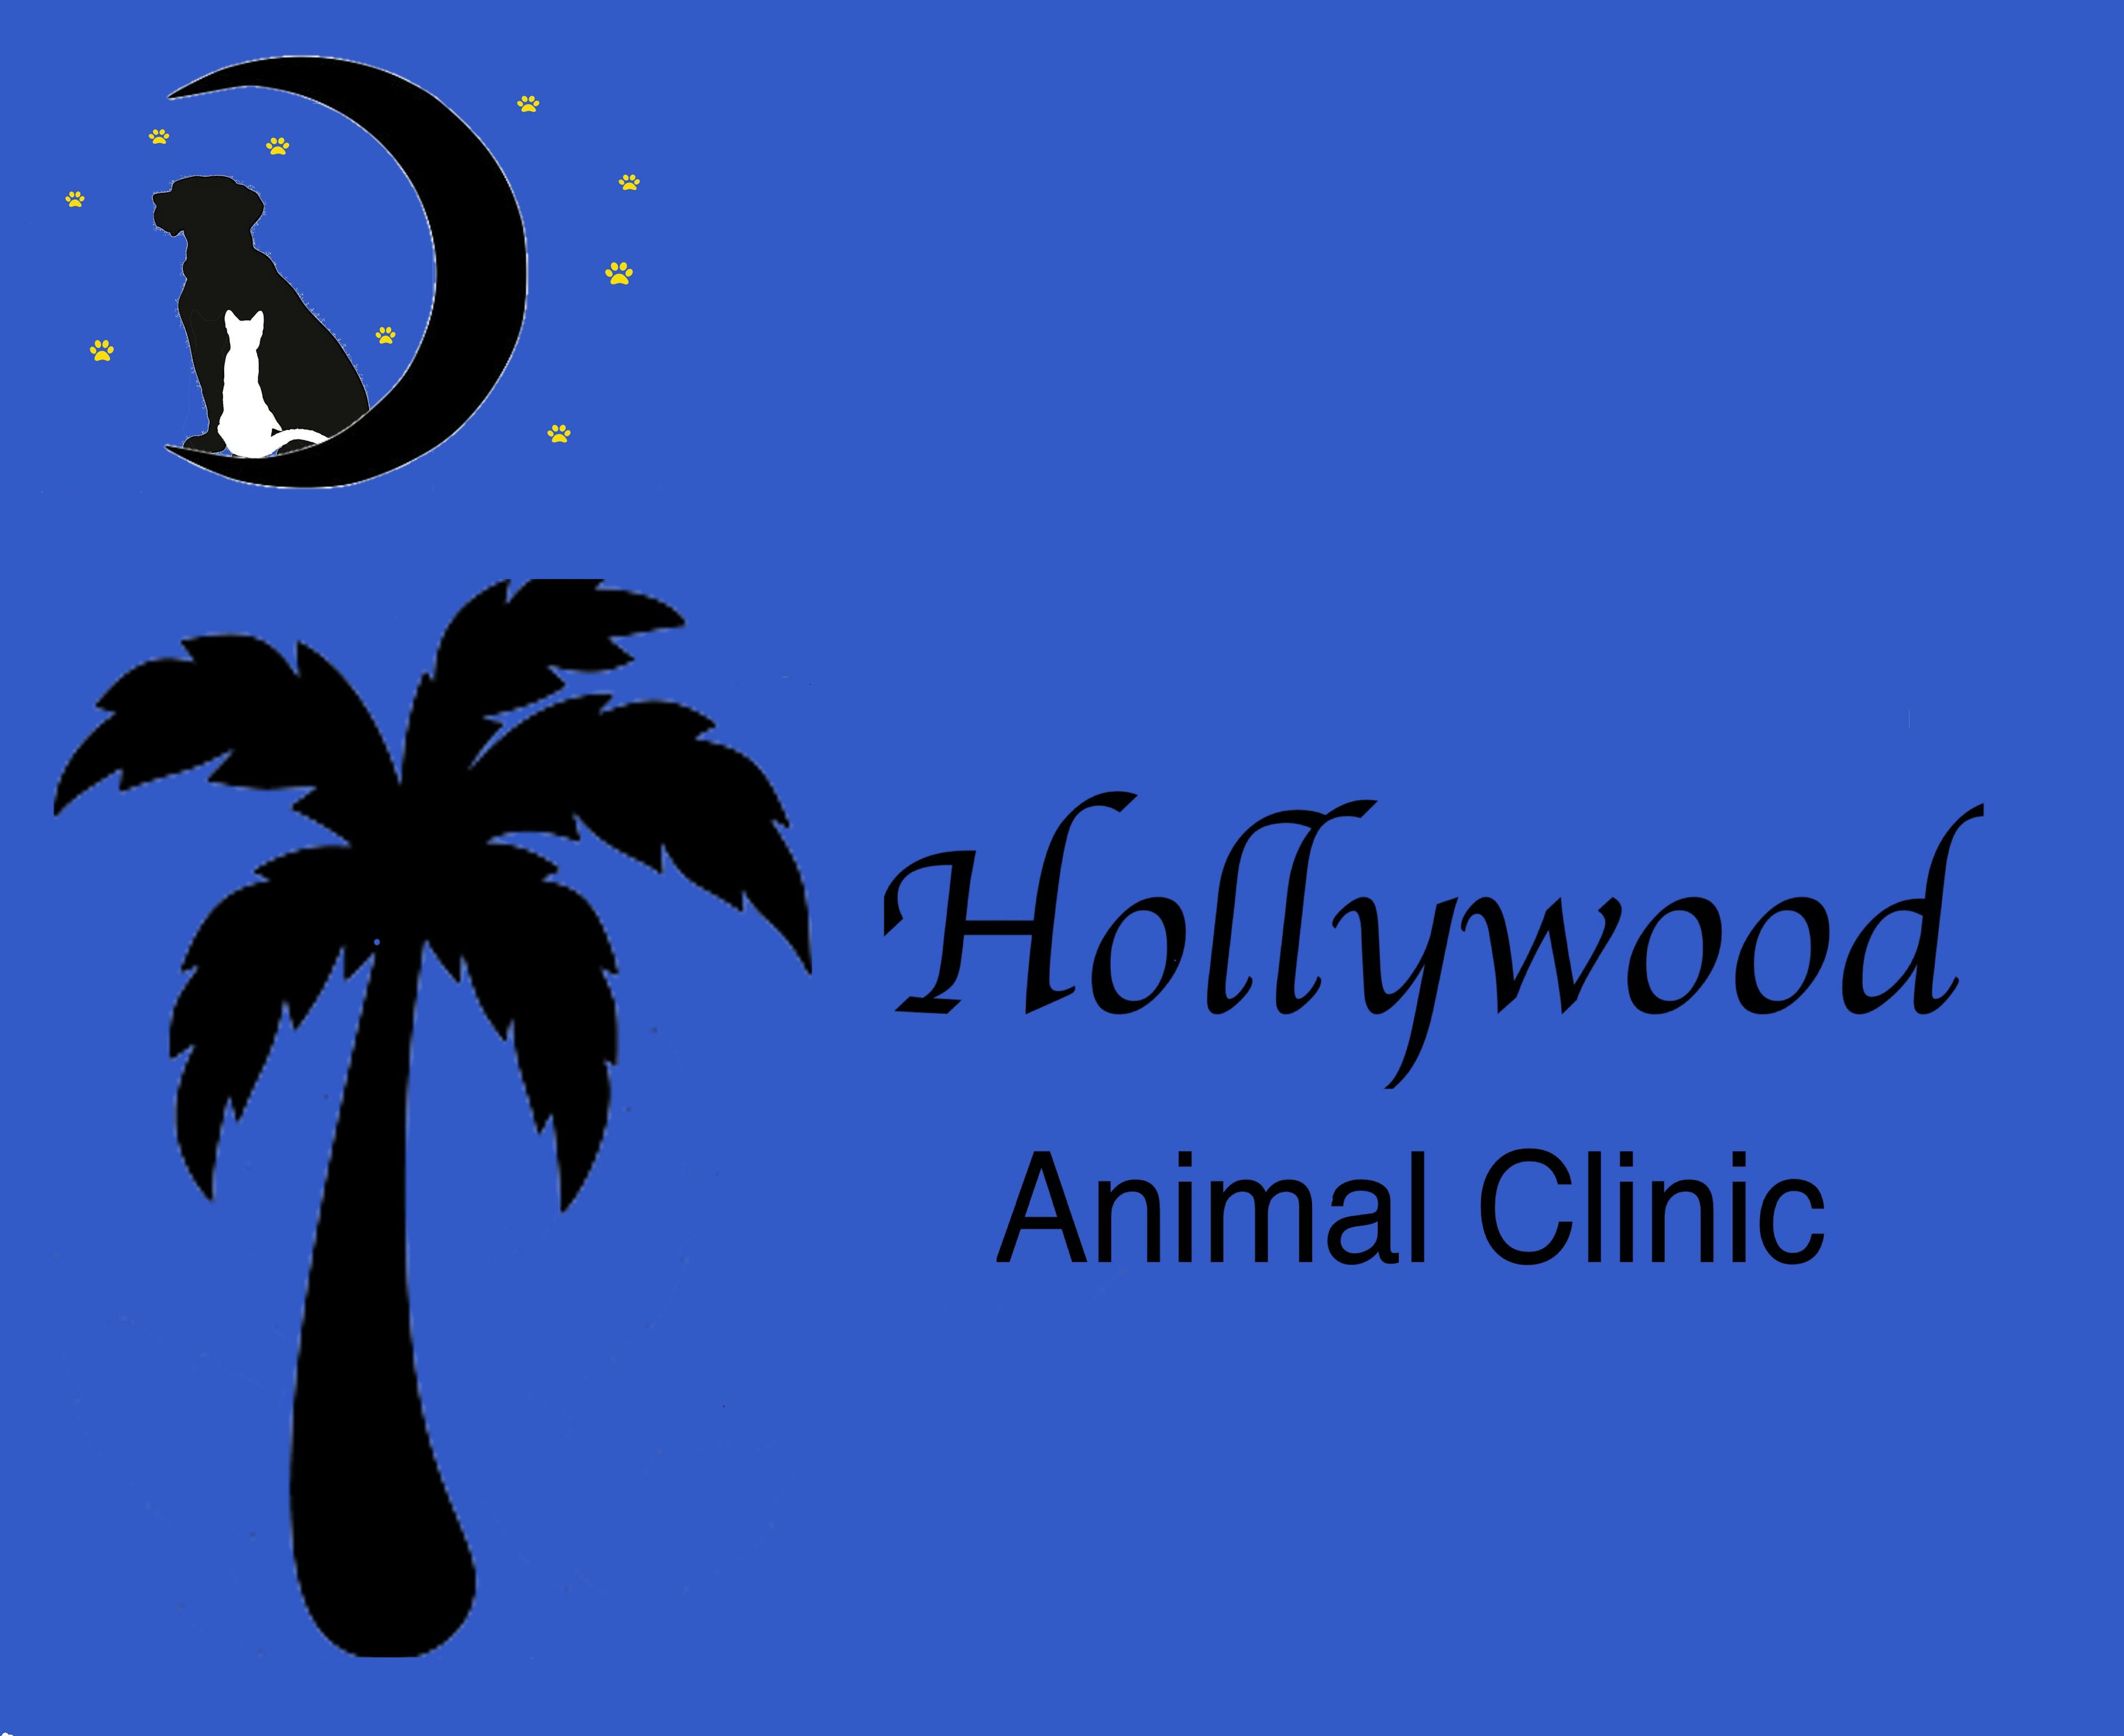 Hollywood Animal Clinic Logo